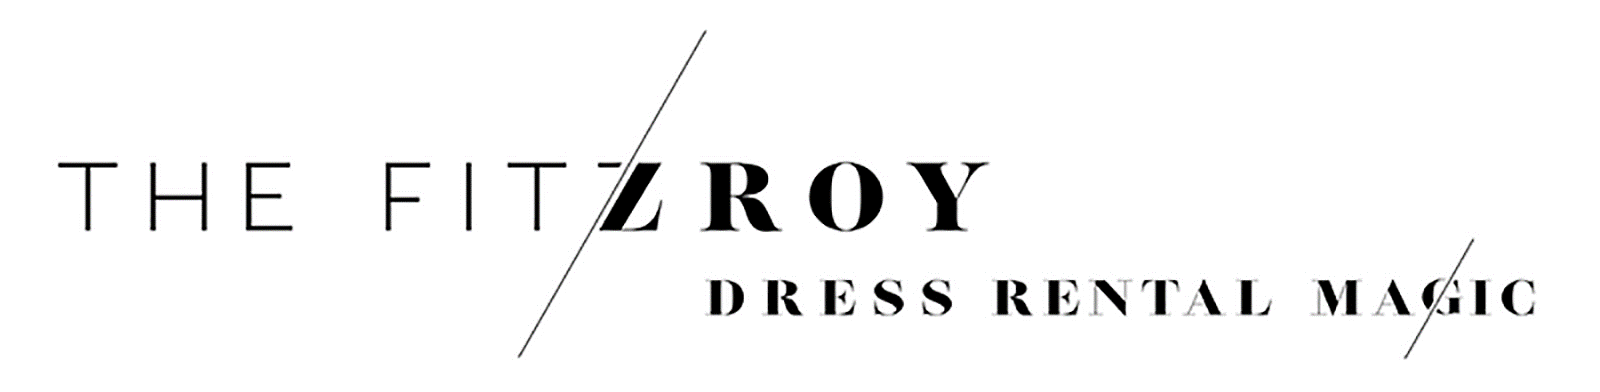 The fitzroy logo